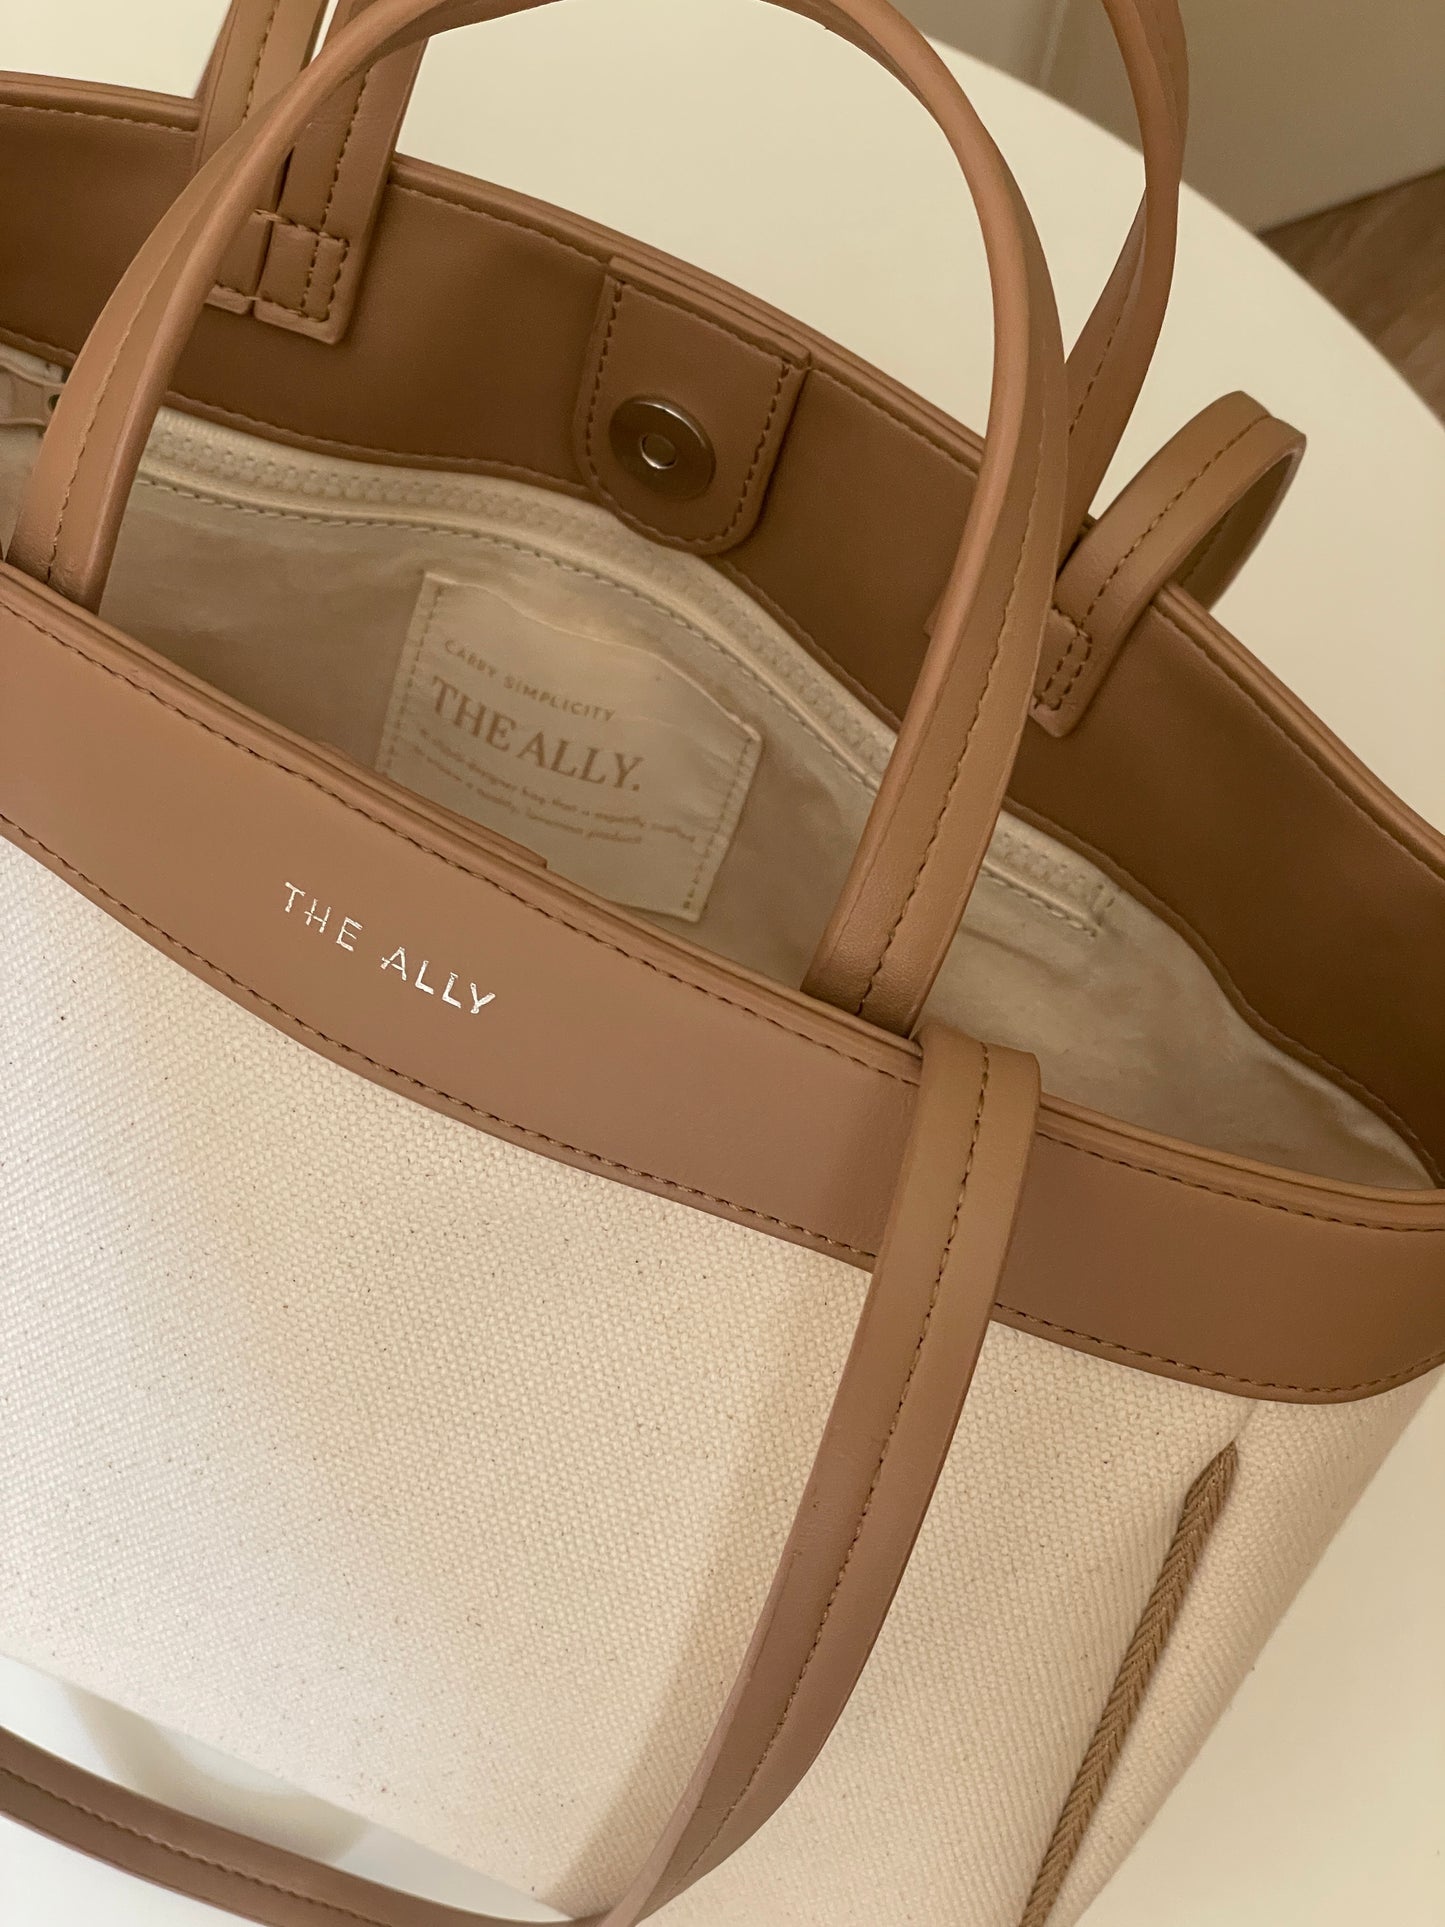 韓國The Ally - Anna Bag